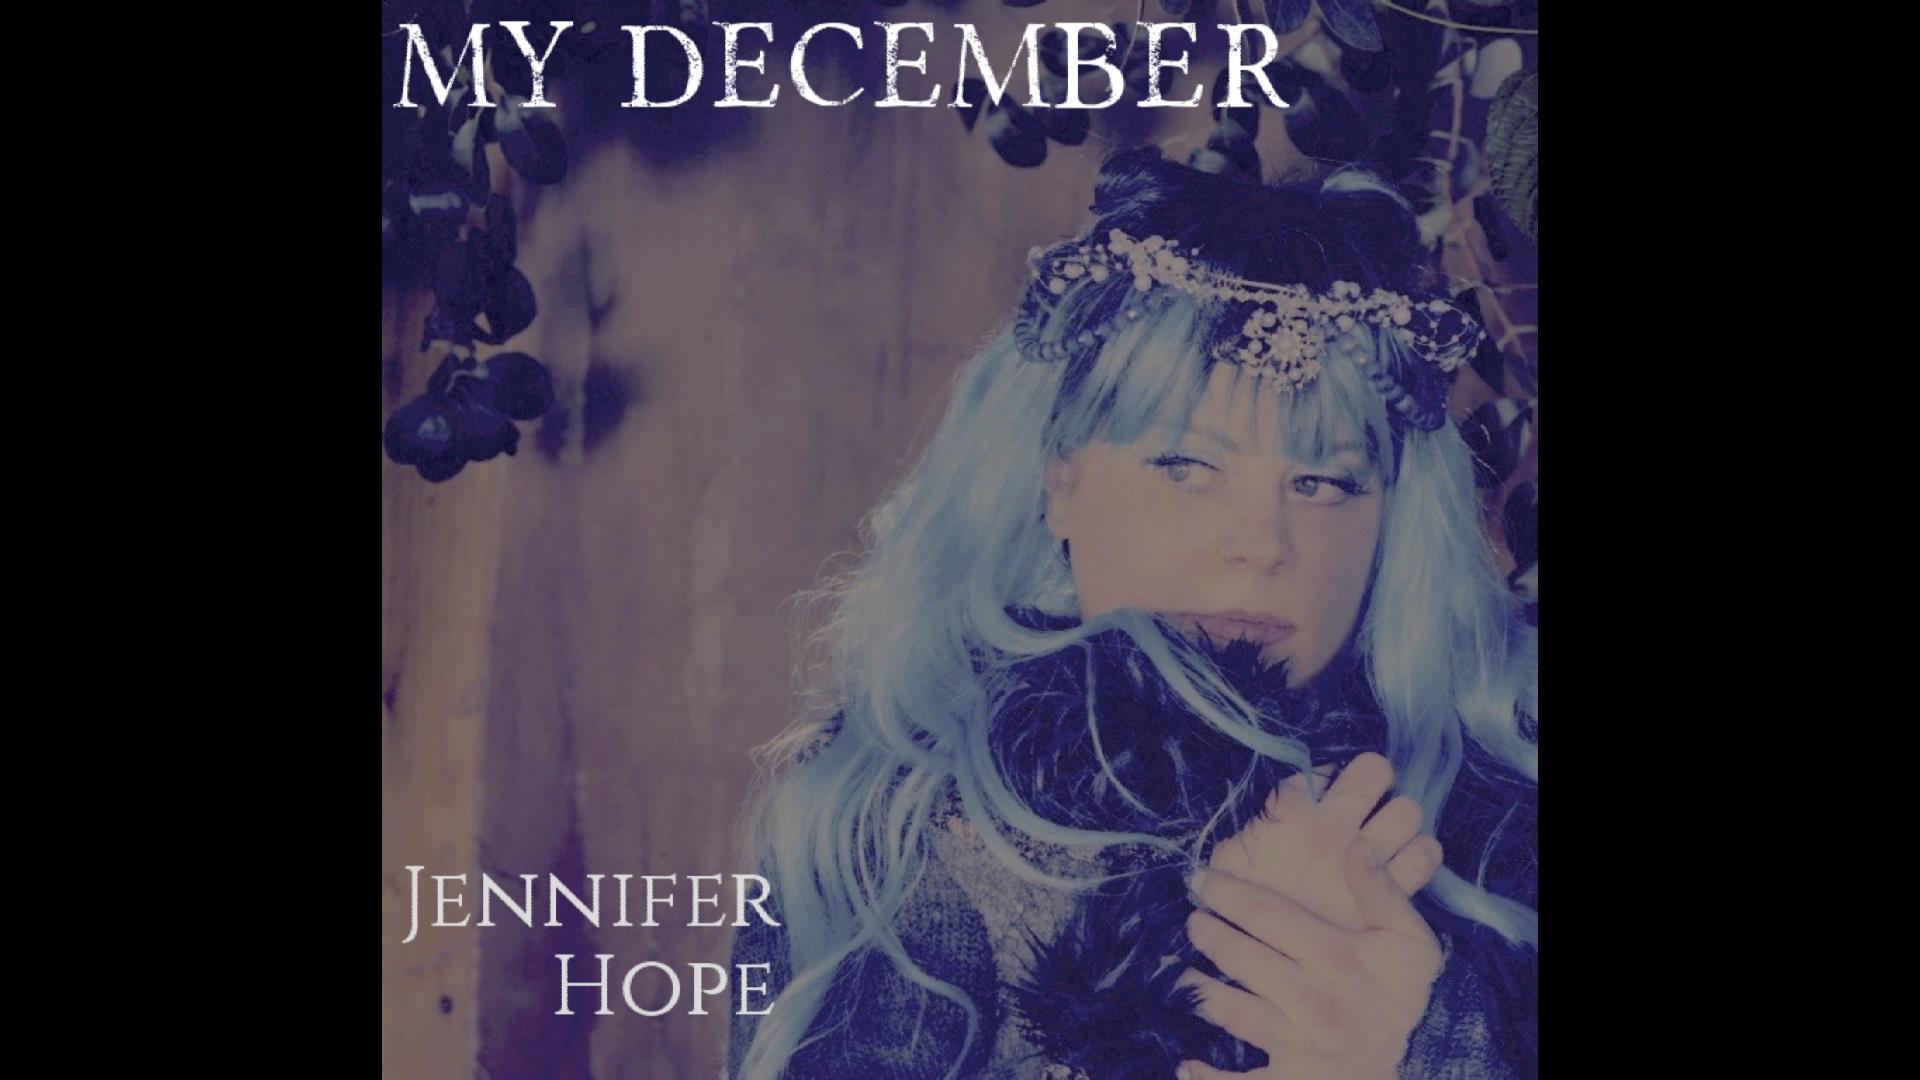  Jennifer Hope – “My December”